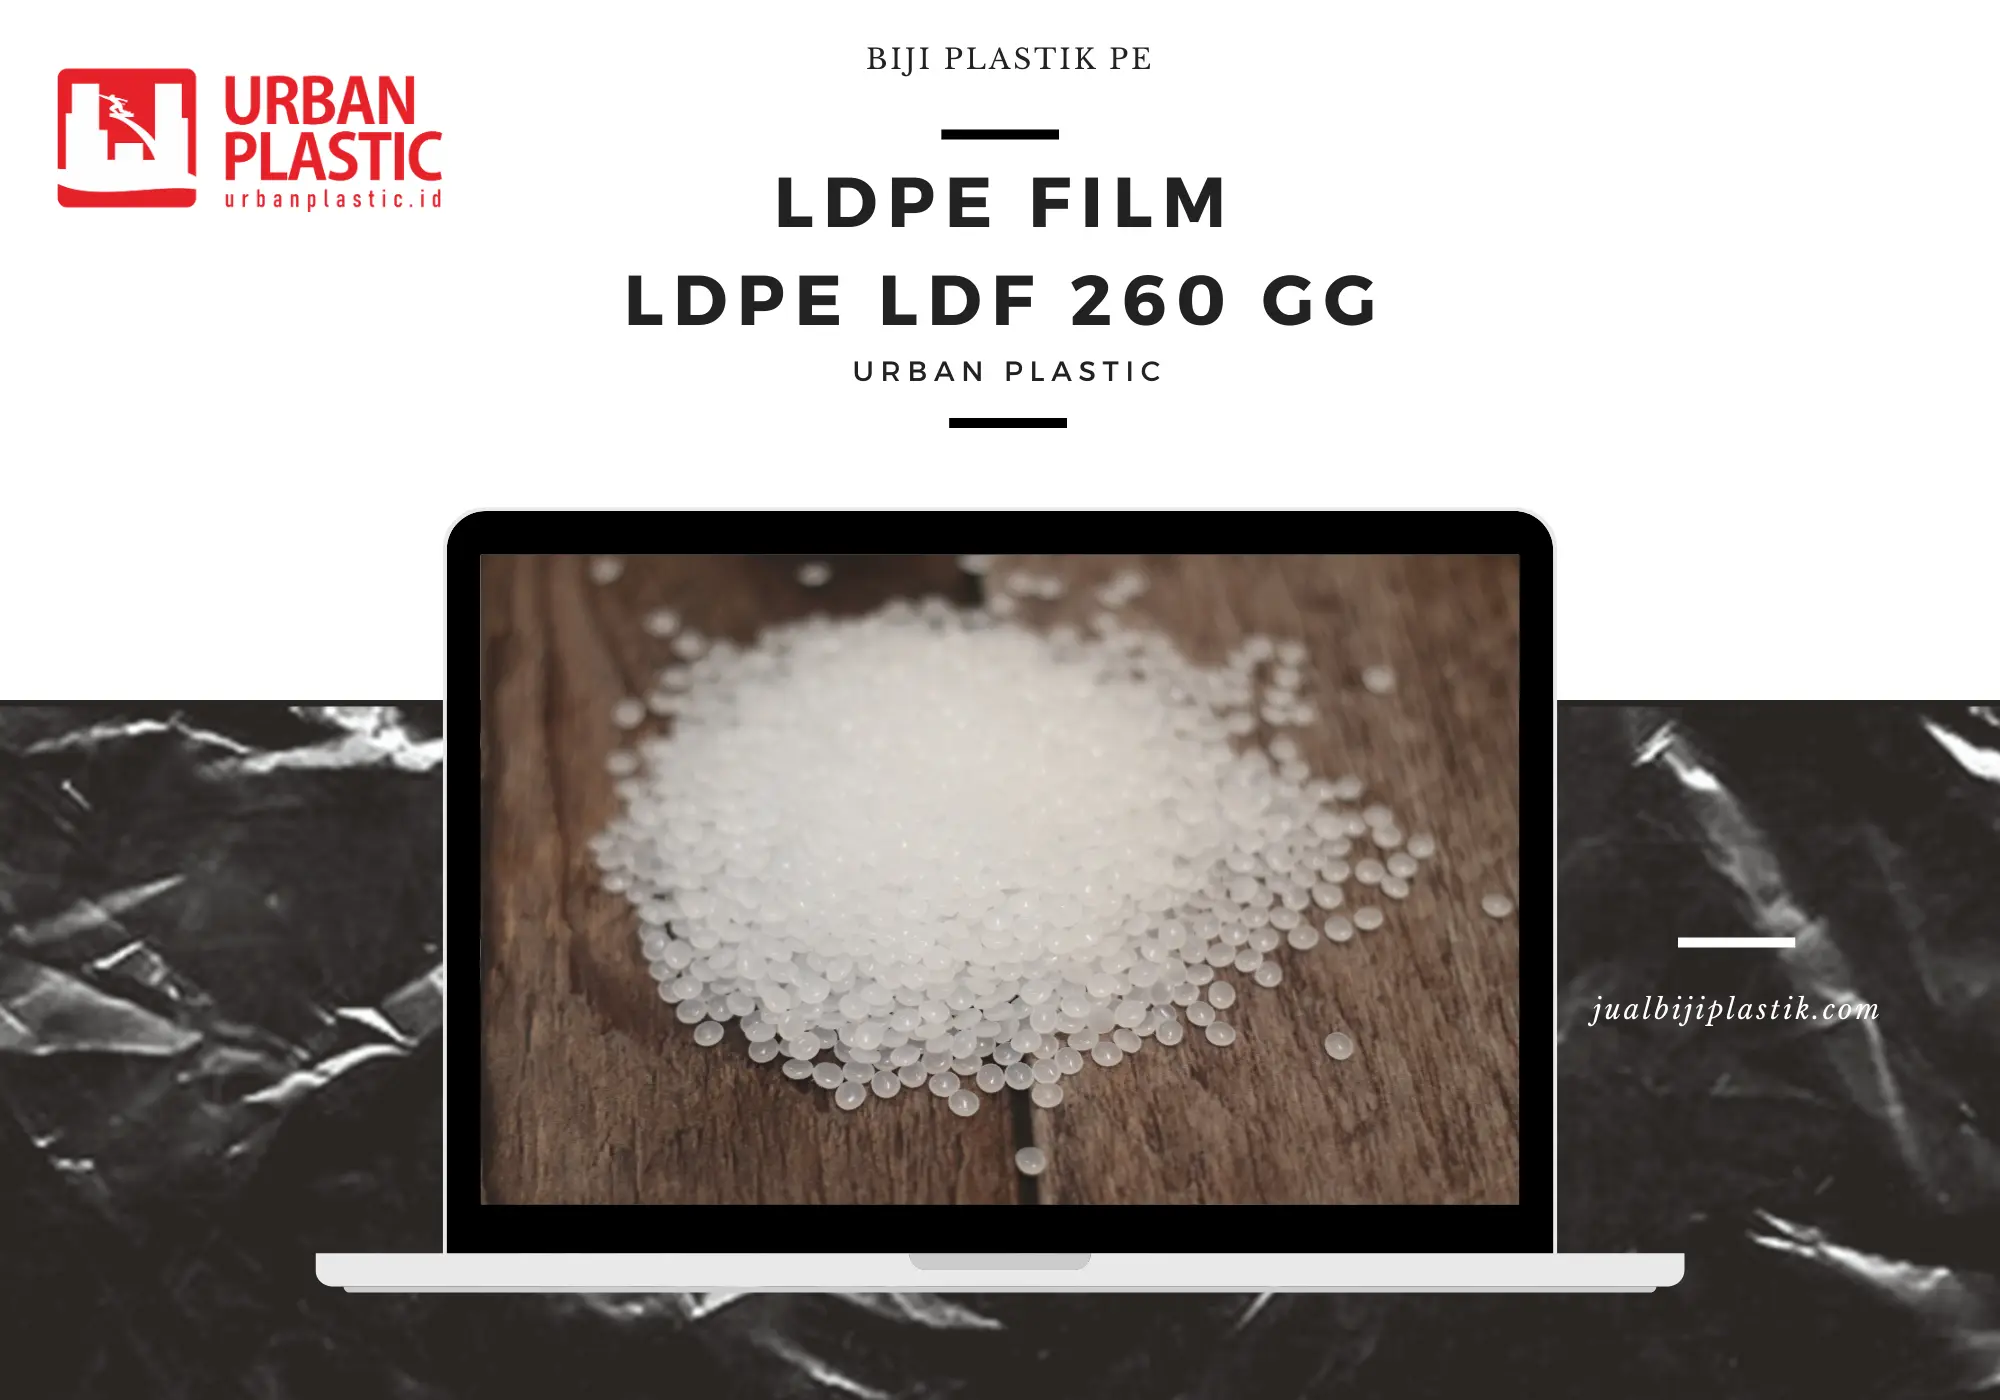 LDPE LDF 260 GG